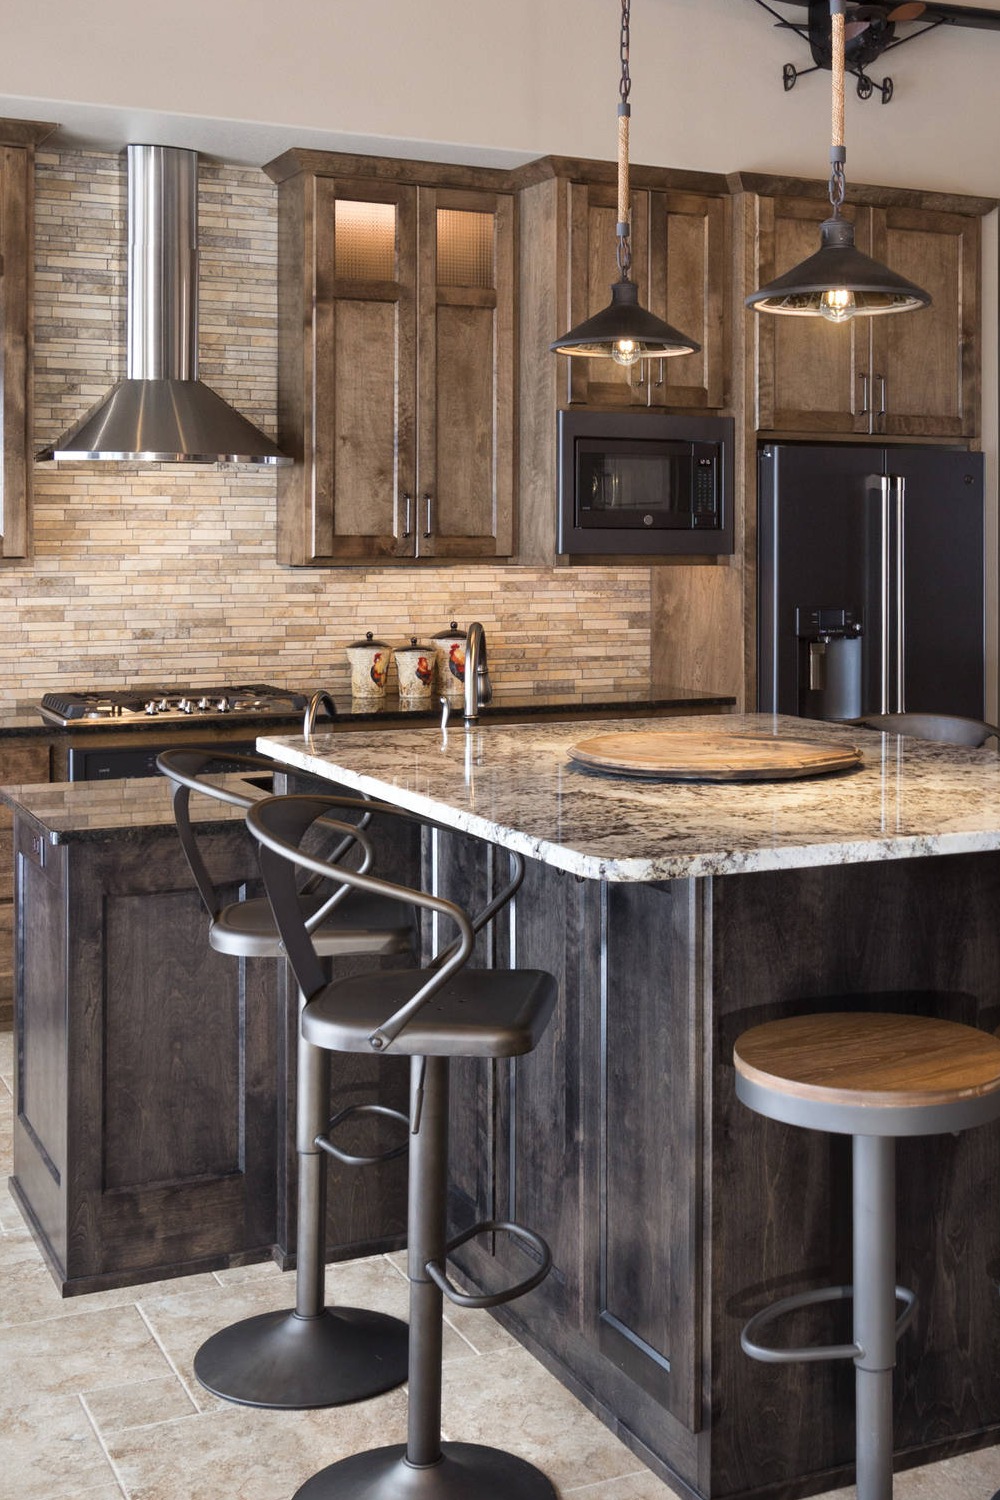 Stainless Steel Appliances Granite Countertops Rustic Style Gray Backsplash Wood Cabinetry Range Hood